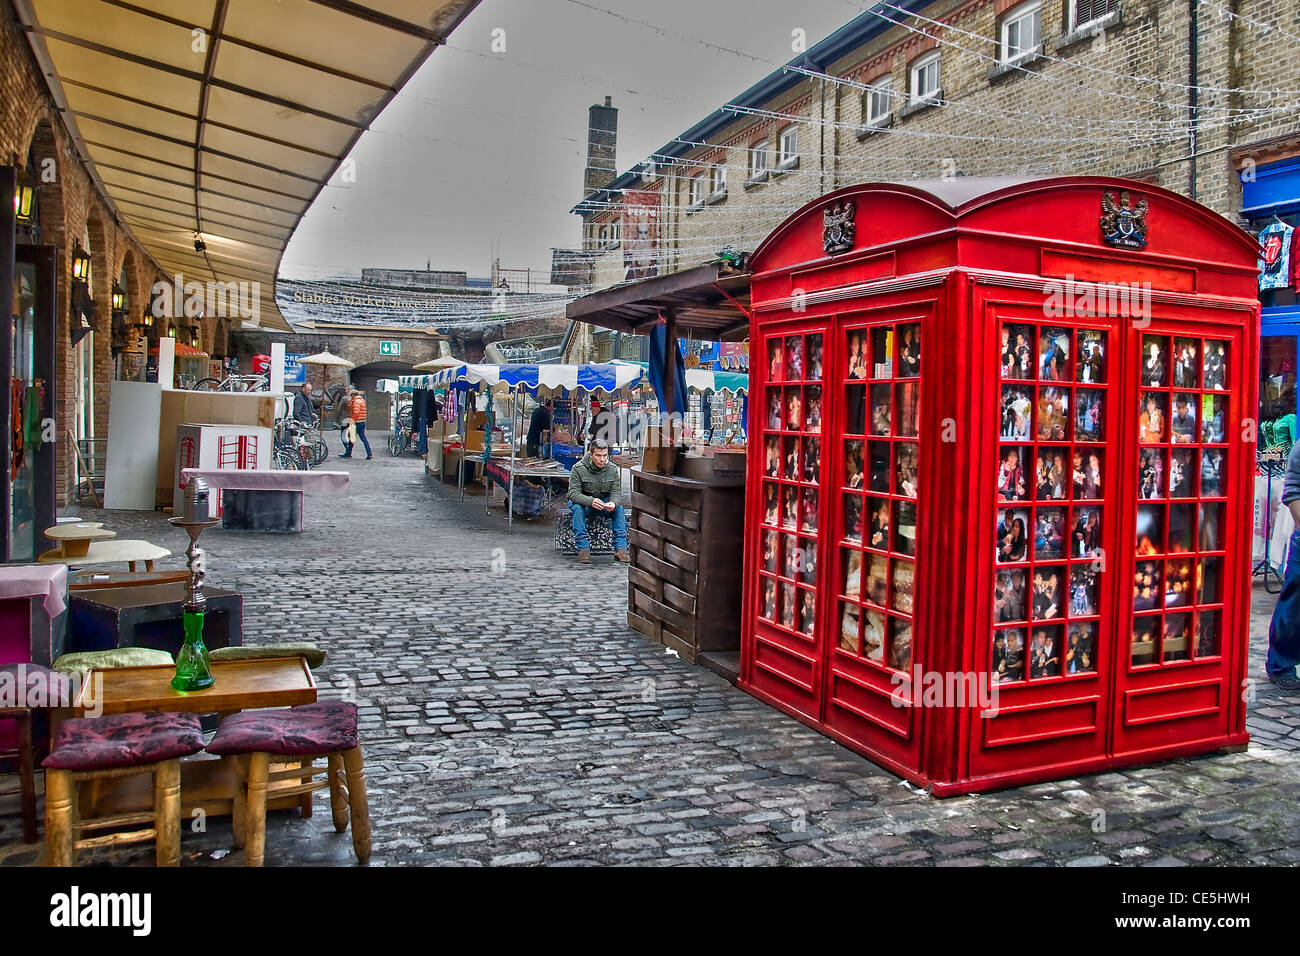 Camden Stables Market - London (UK) Stockfoto